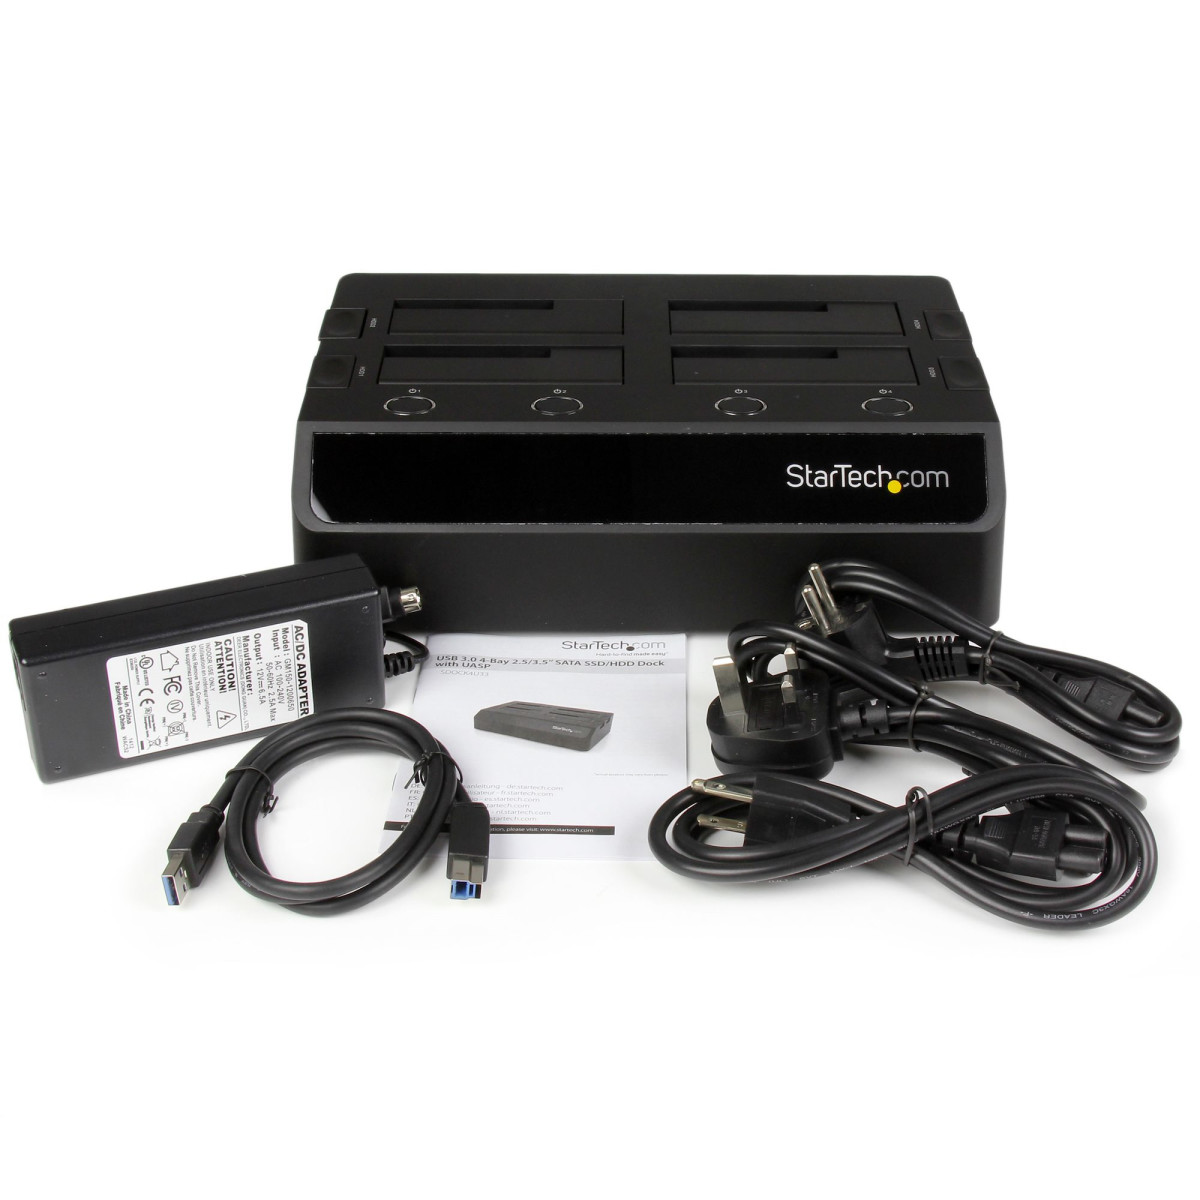 USB 3.0 4 Bay SATA HD Docking Station